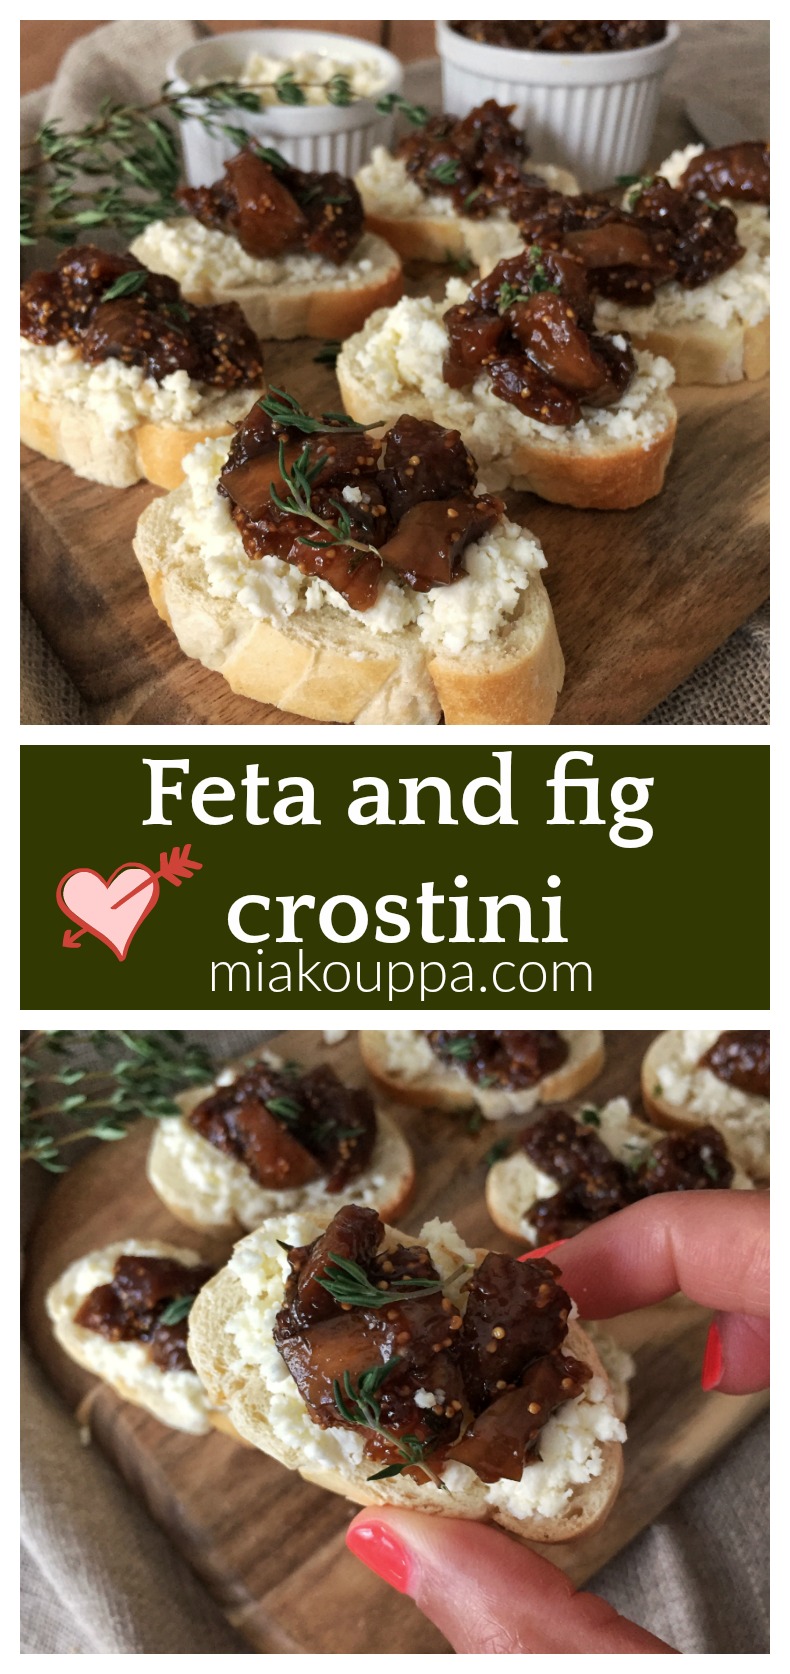 Feta and fig crostini